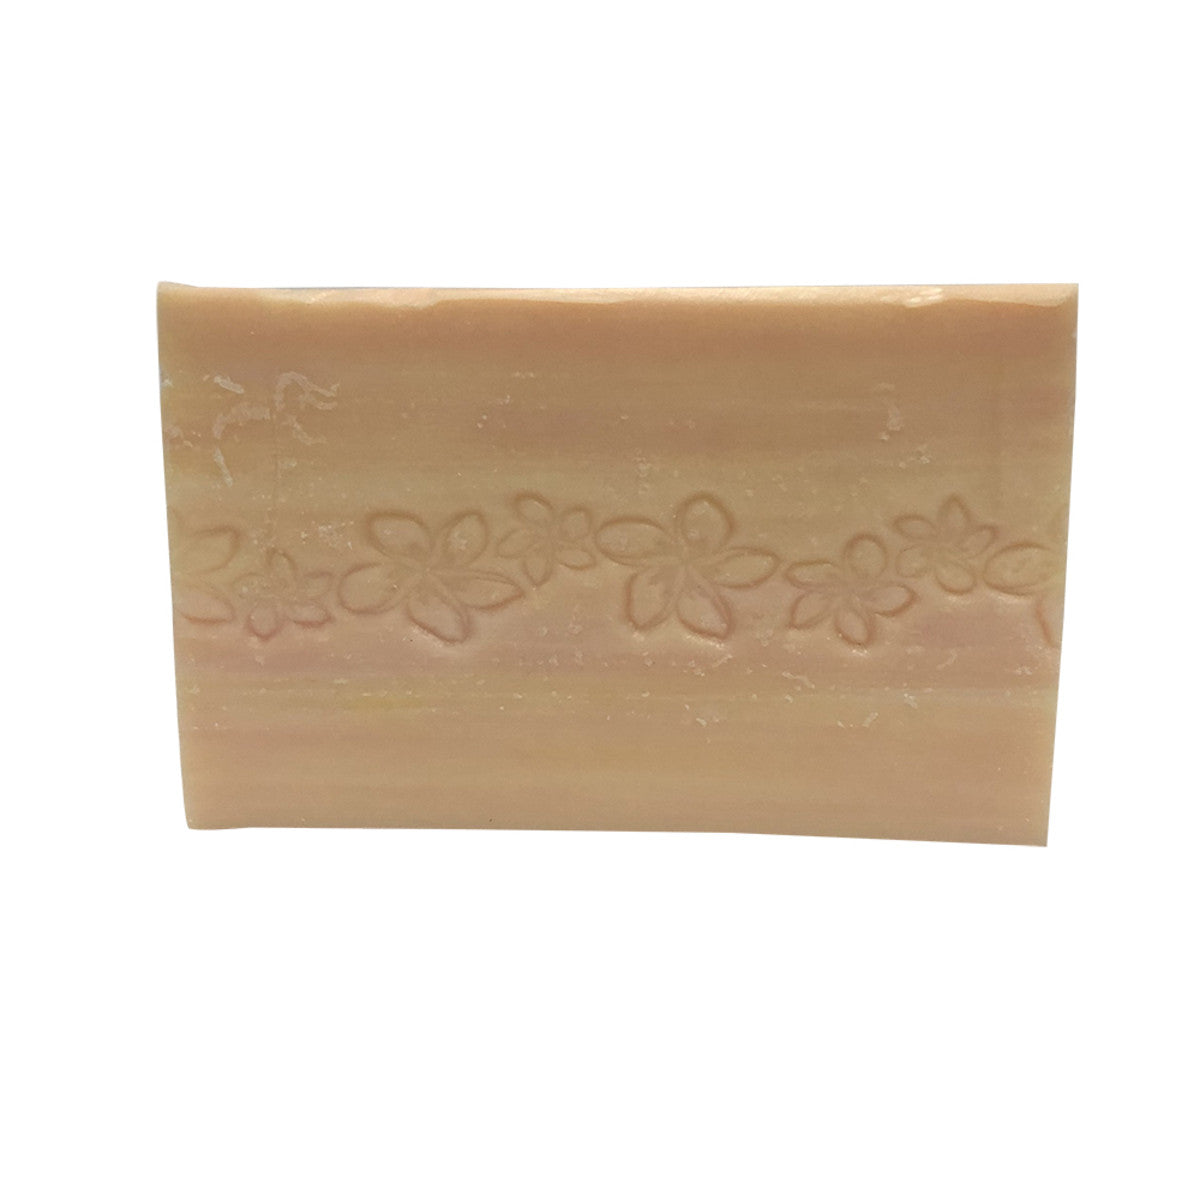 Clover Fields - Frangipani Soap